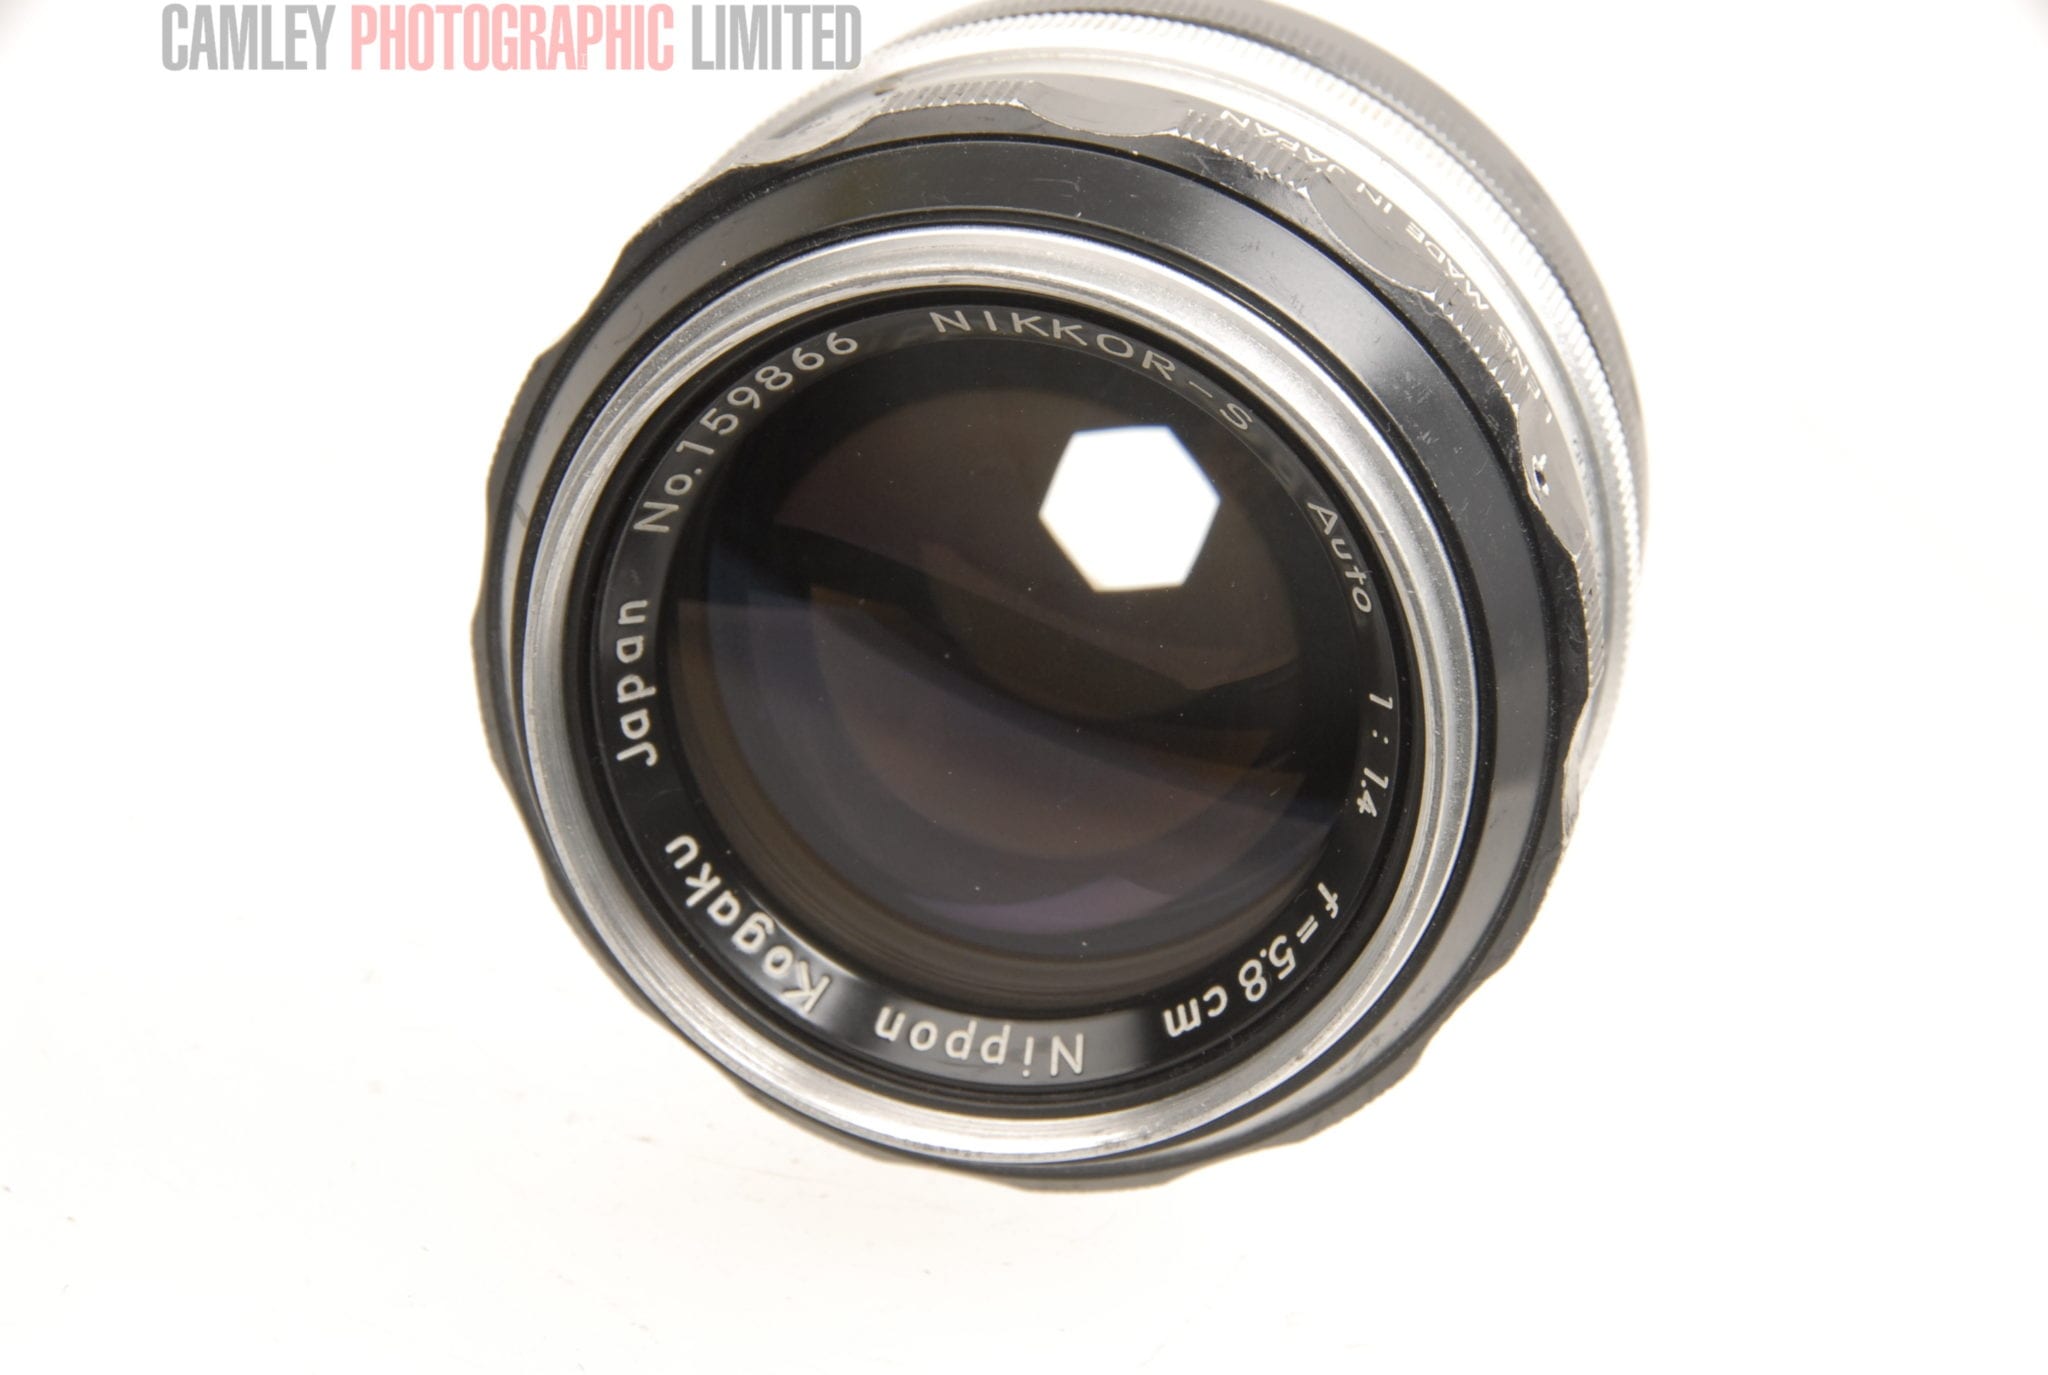 Nikon f1.4 5.8cm lens. Pat Pend. Nikkor-S. Graded: BGN [#8046]